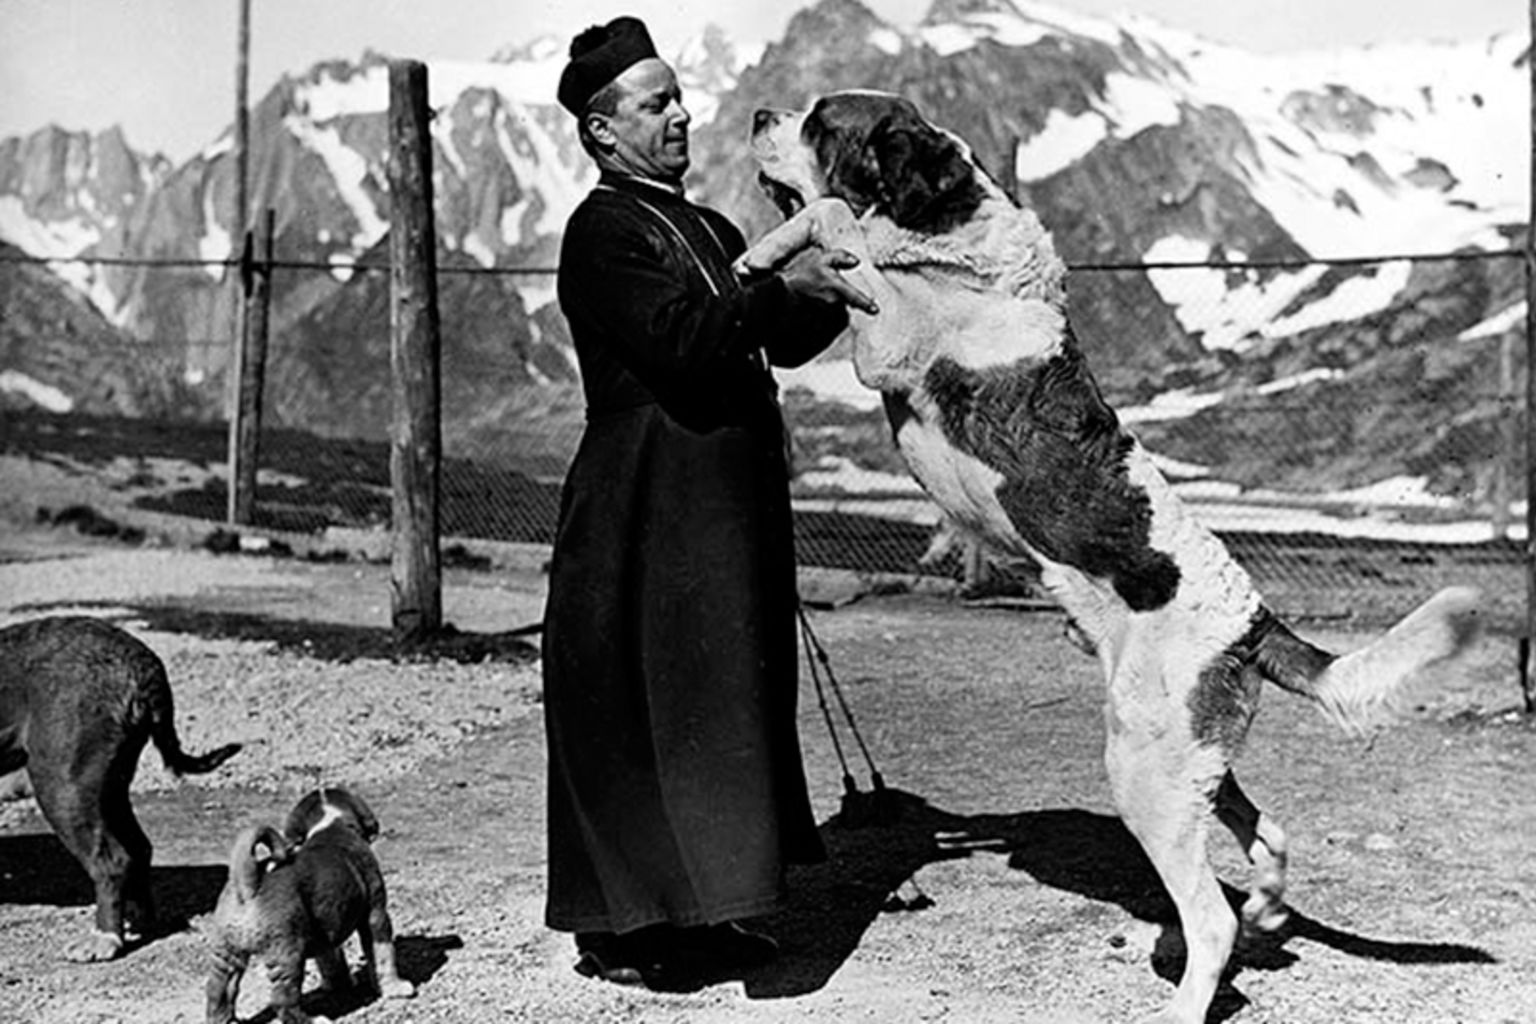 Canon and dog at Great St. Bernard, Ca. 1950–1960, ©Max Kettel, UVT, Médiathèque Valais – Martigny